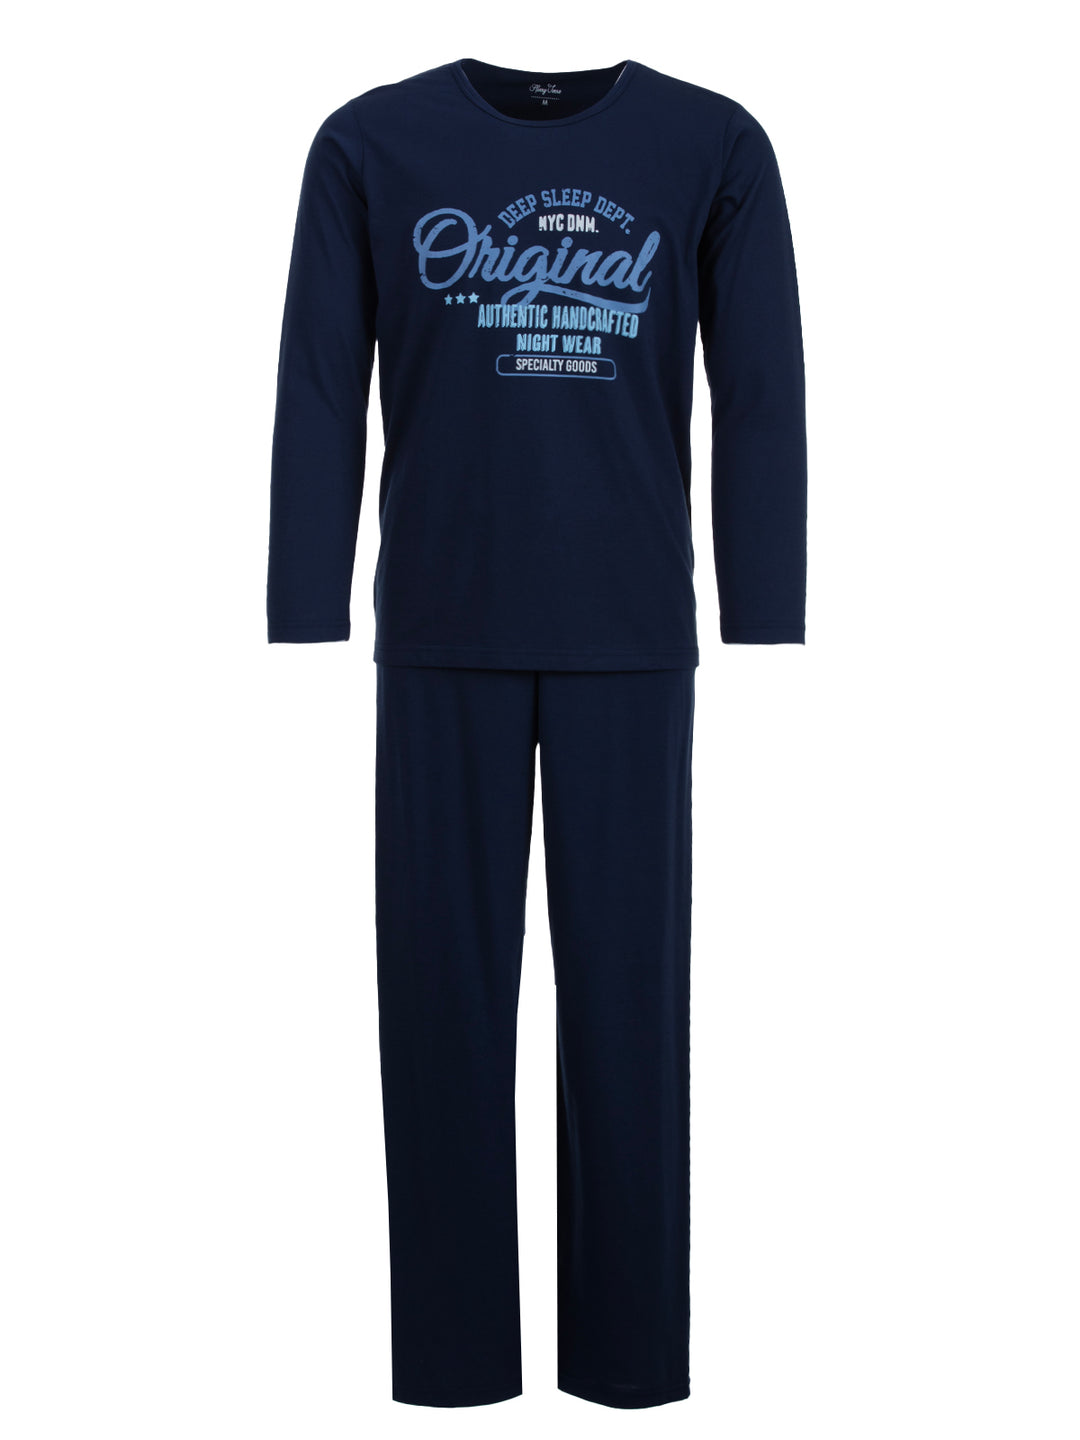 Pyjama Set Langarm - Original Authentic Nightwear